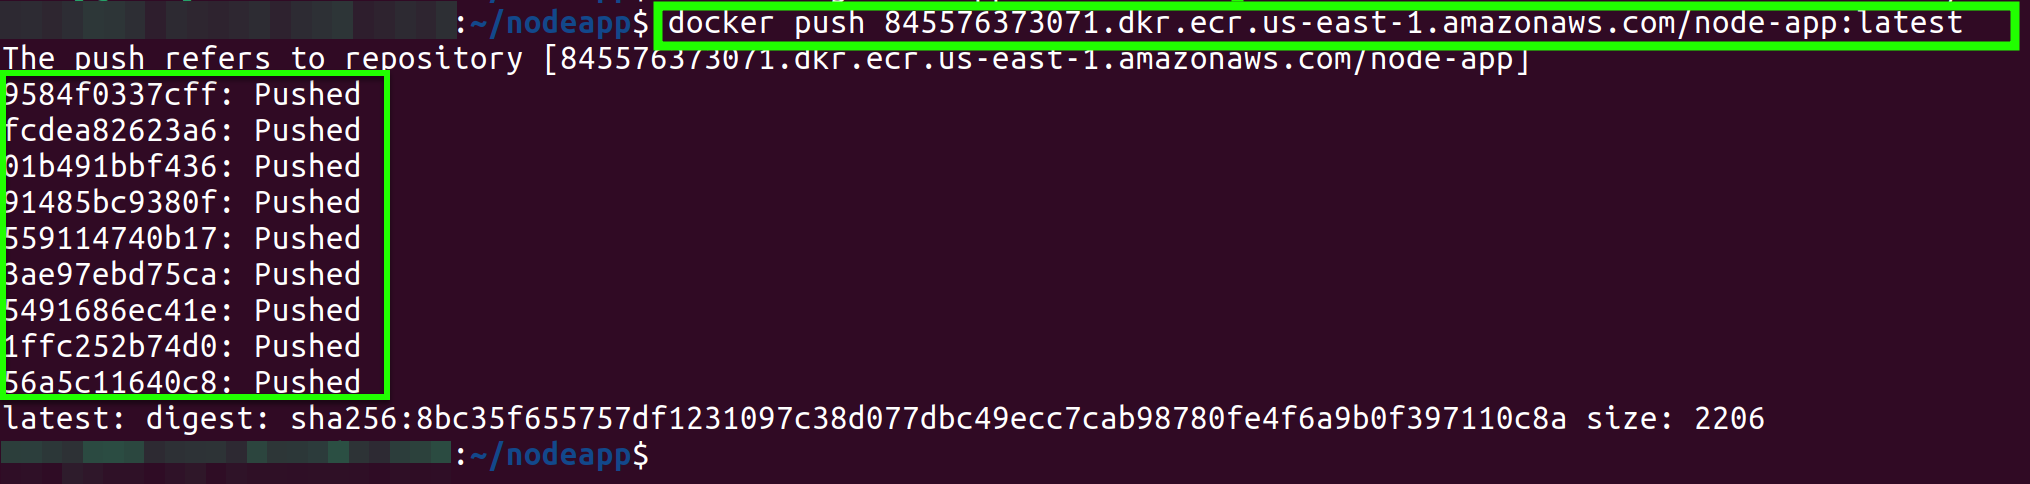 Pushing Docker image to the repository on AWS ECR via the AWS CLI 